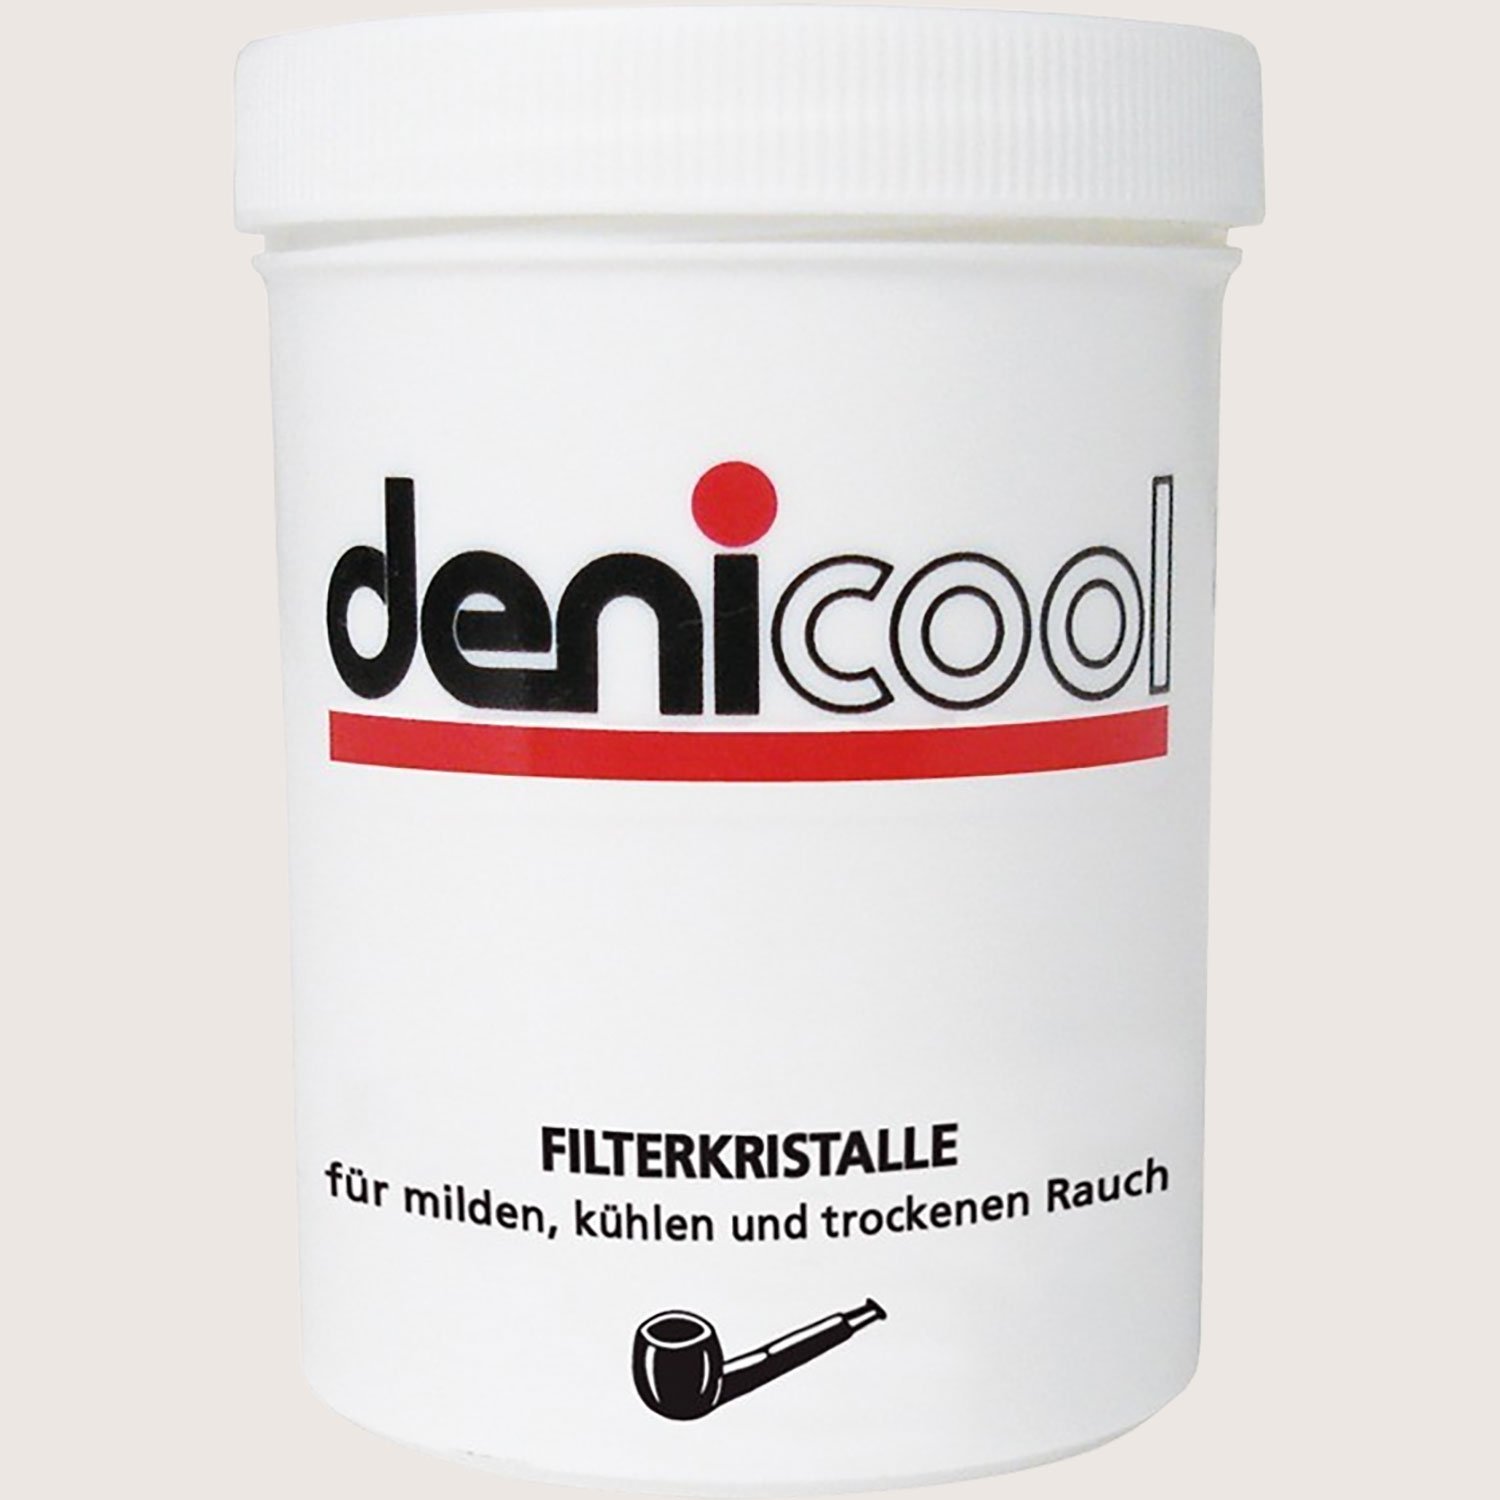 Denicotea Denicool Filterkristalle 60 g